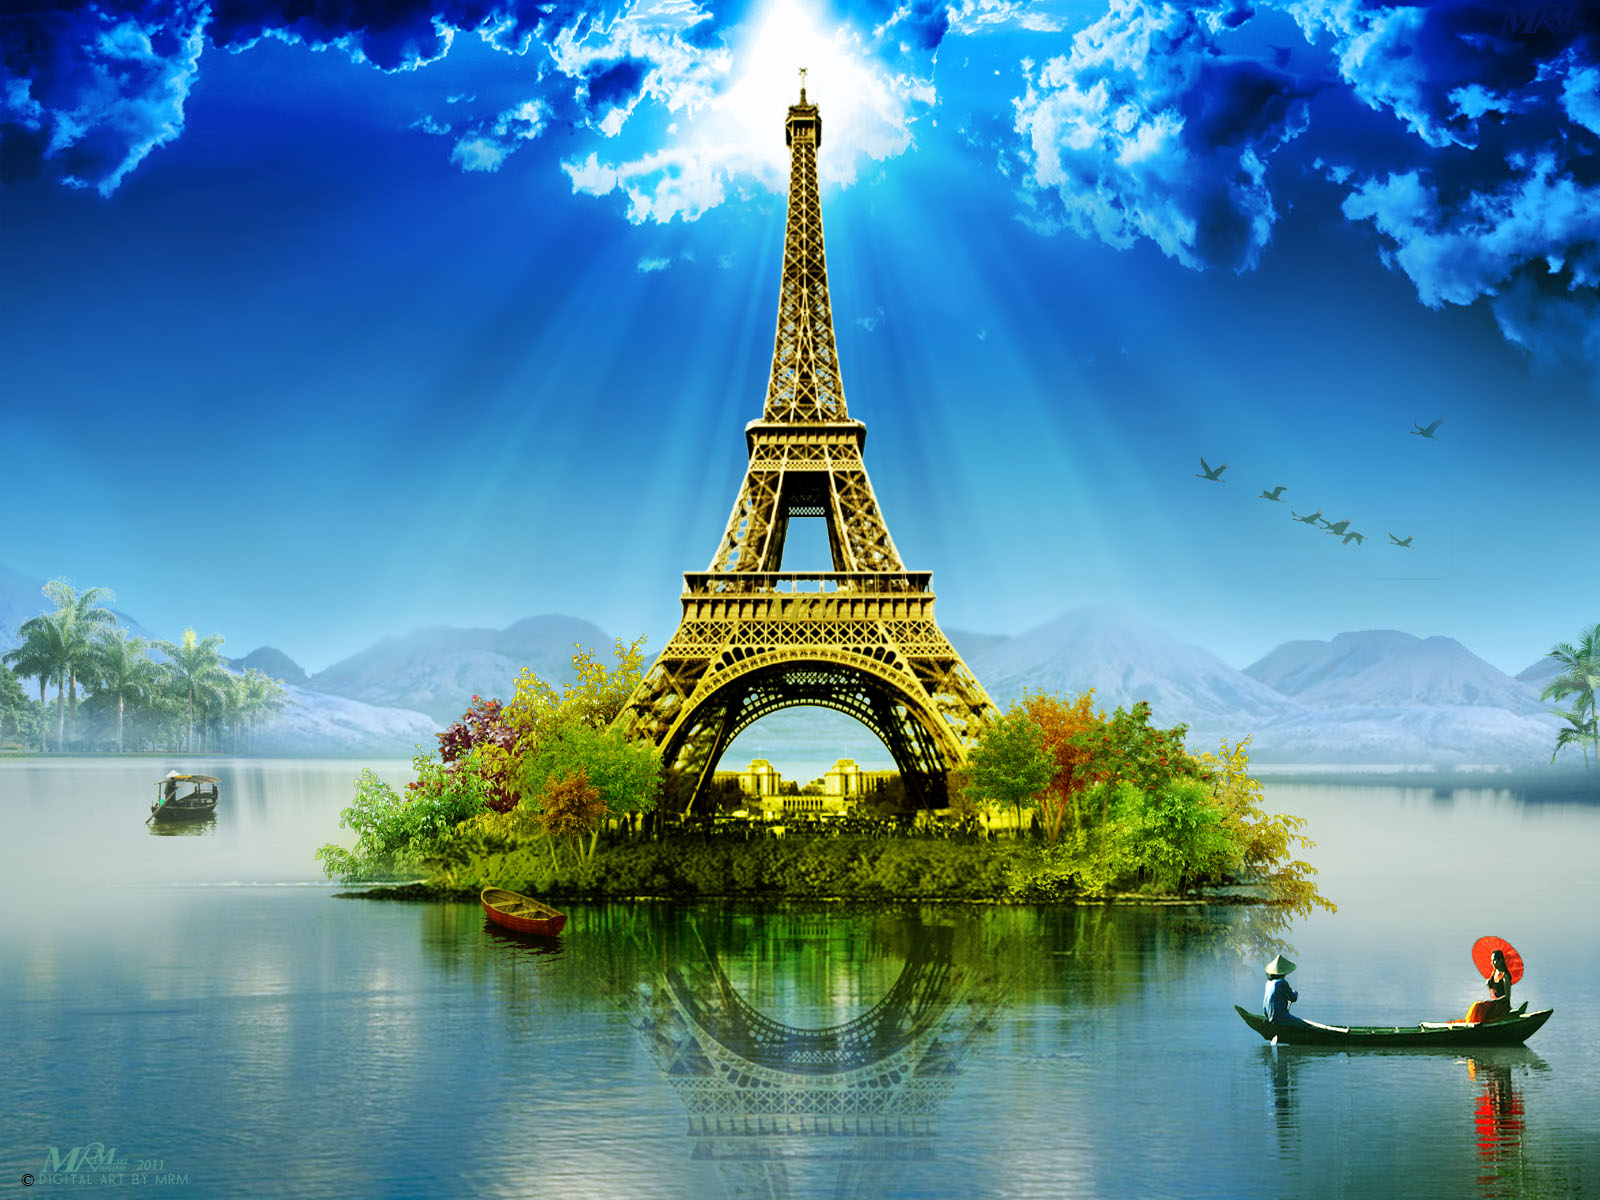 Eiffel Tower Wallpaper Cartoon   HD Wallpapers